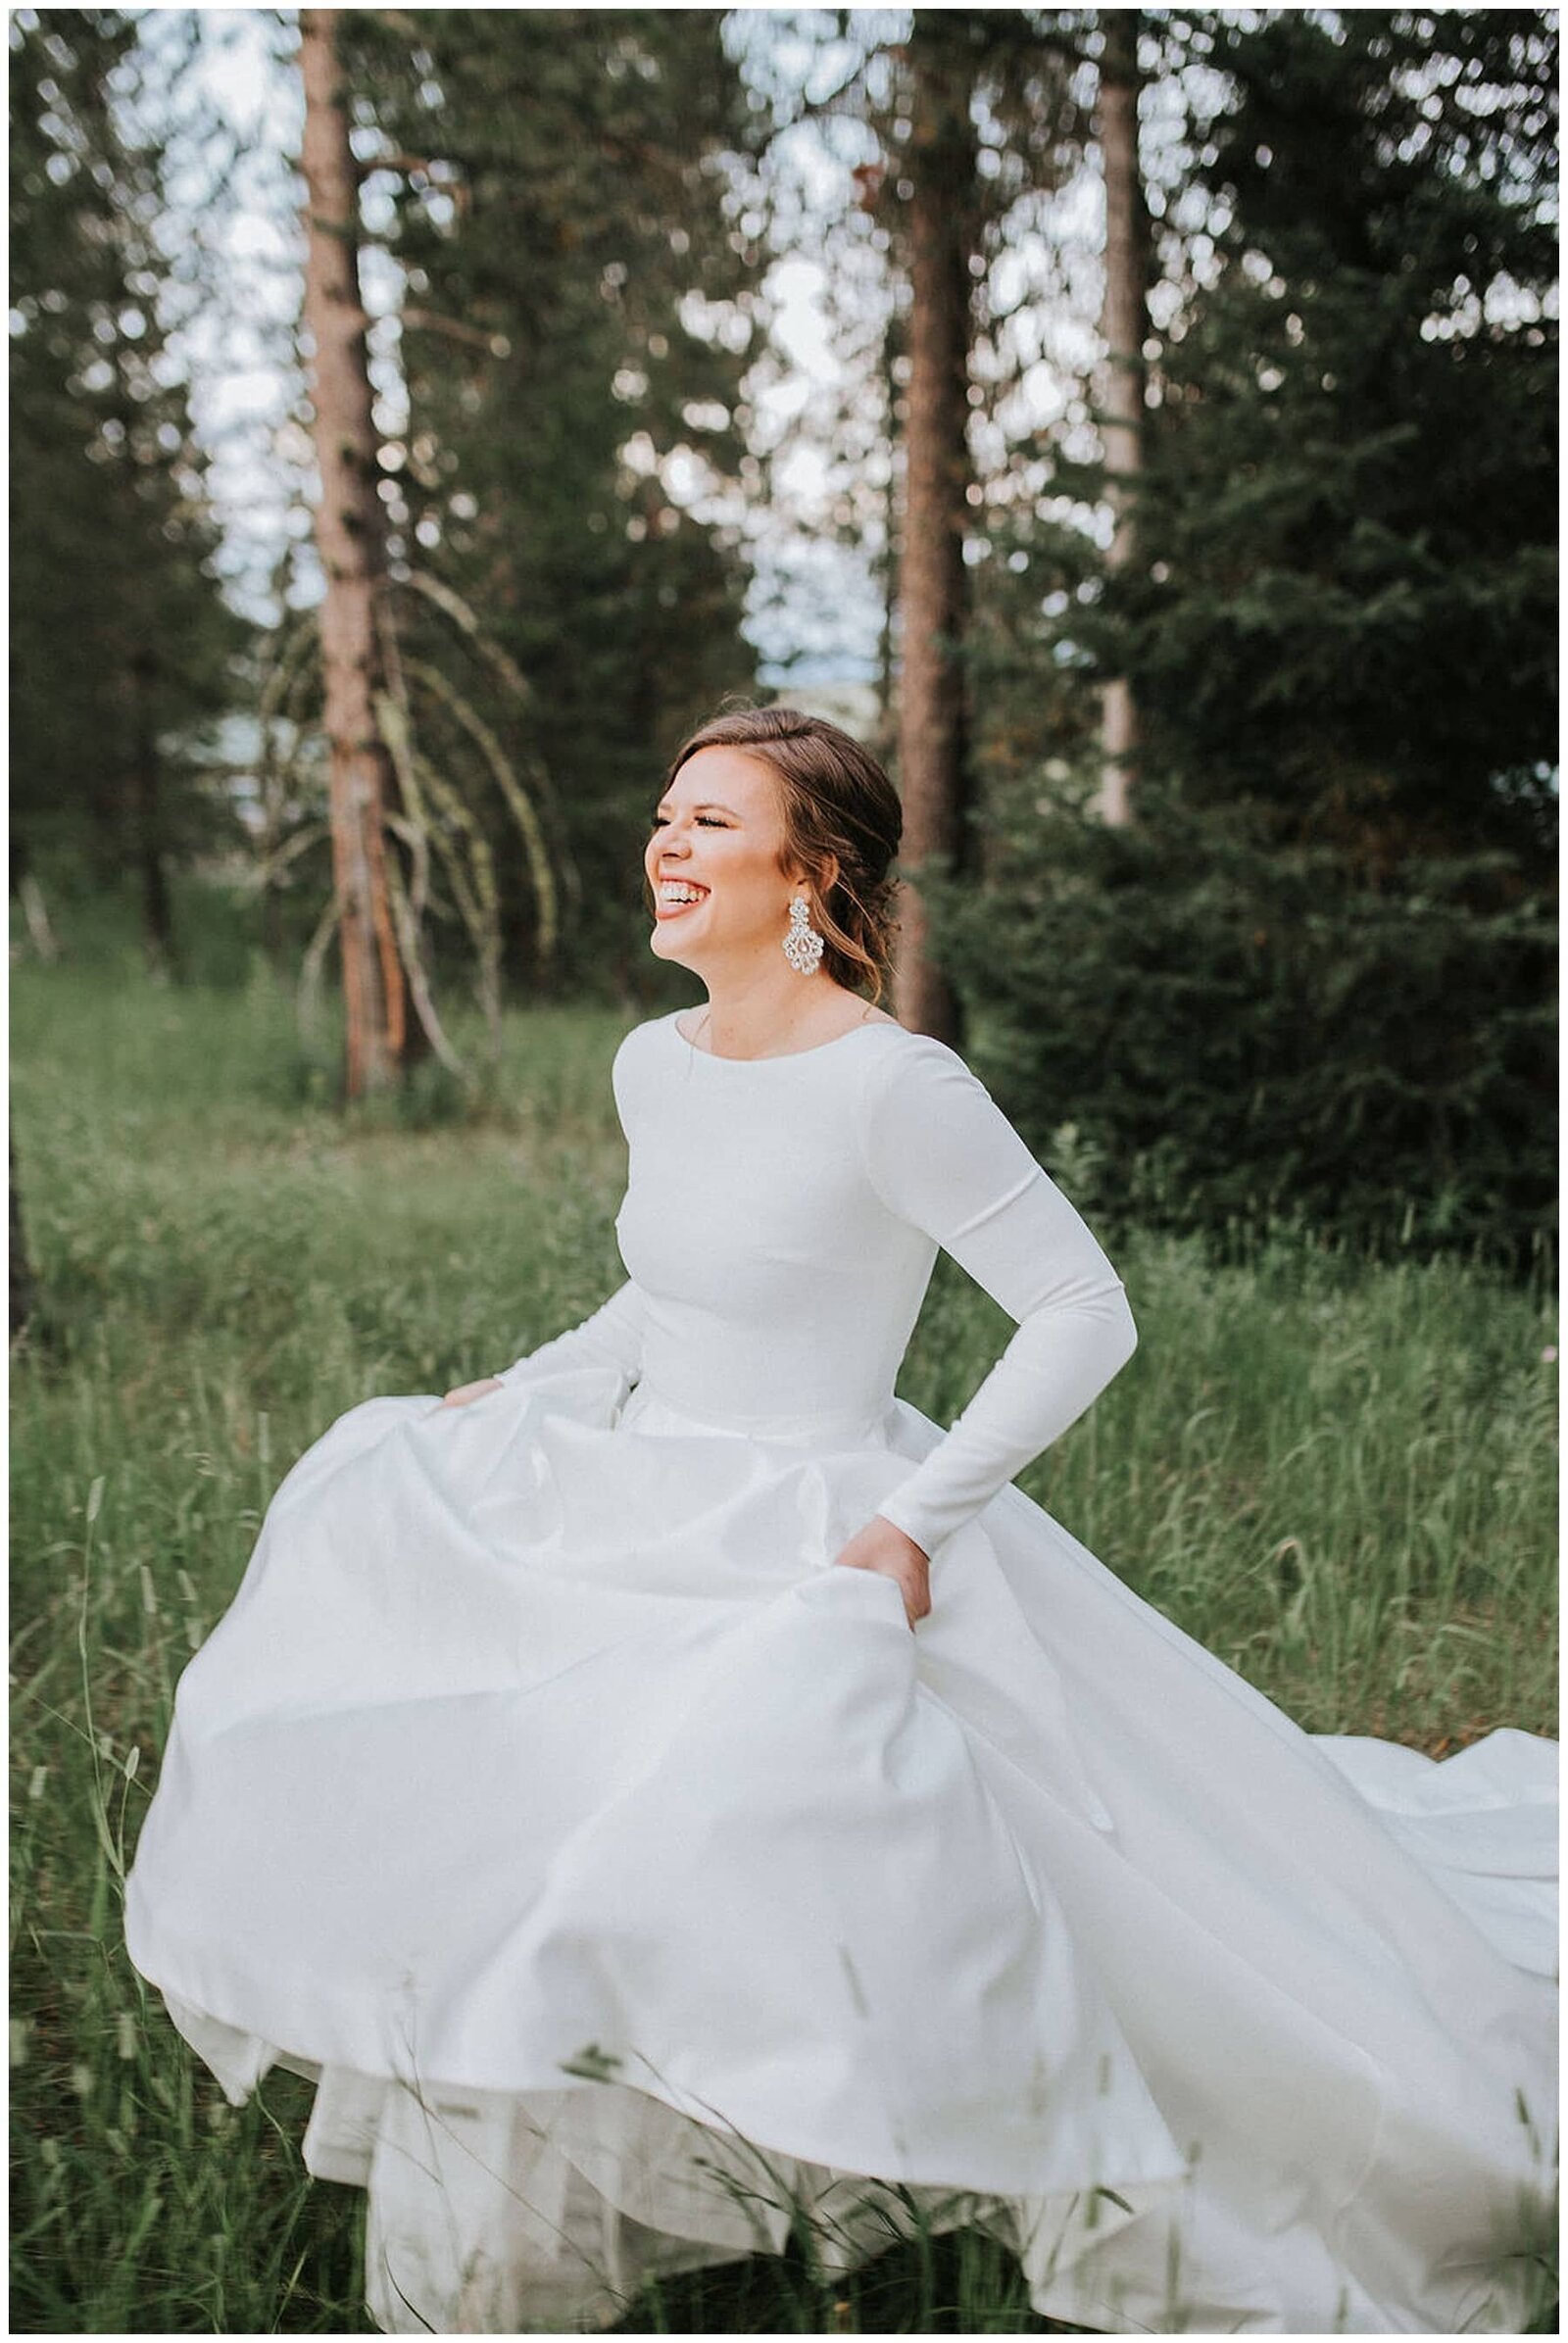 Sacramento wedding photographers capture bride carrying dress while walking through forest